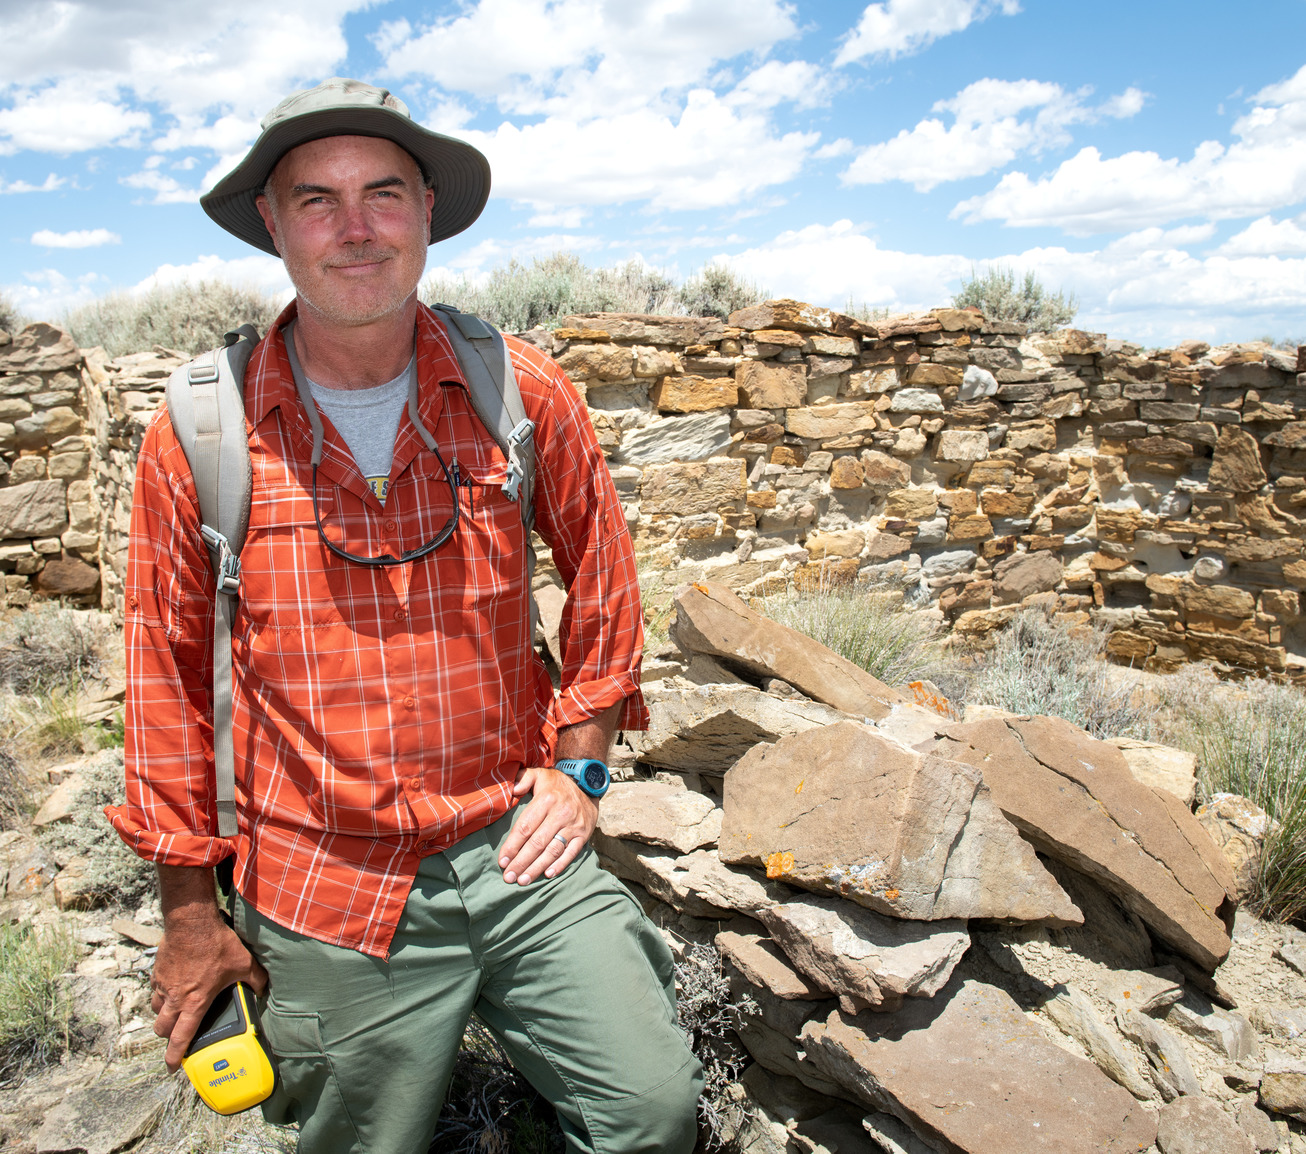 Anthropology professor posing at dig site